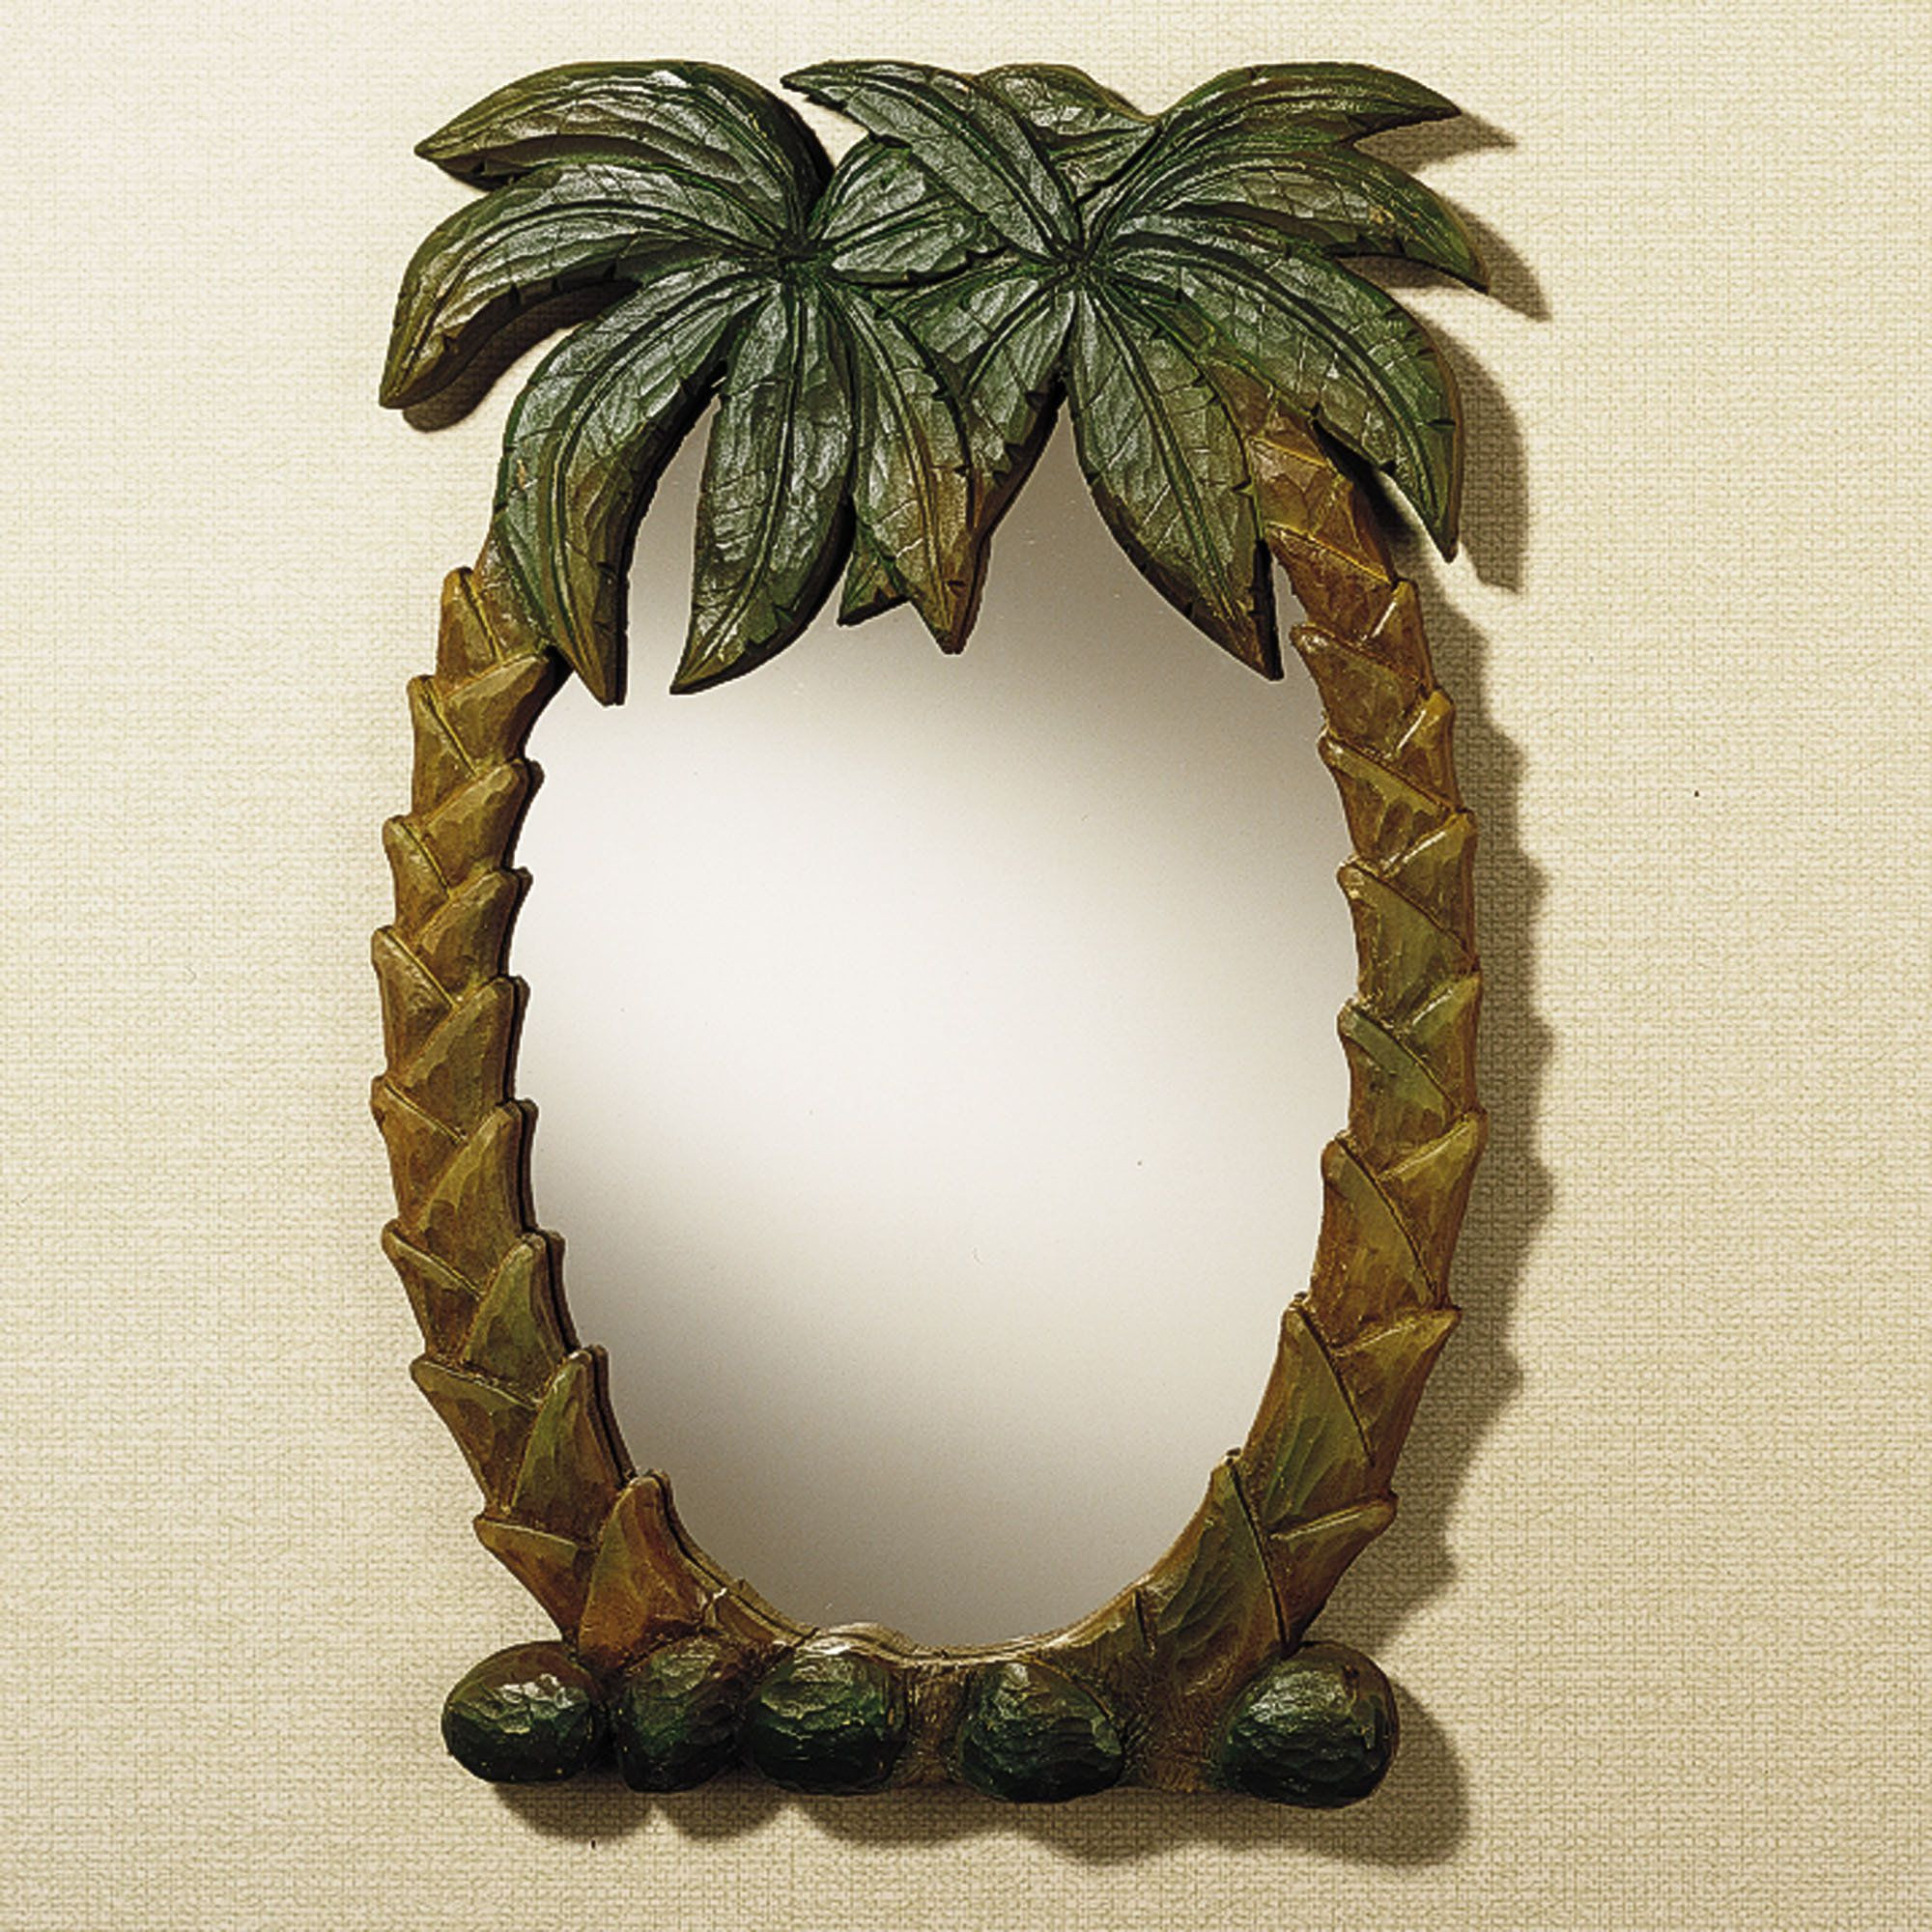 Palm Tree Bathroom Decor
 Palm Tree Wall Mirror